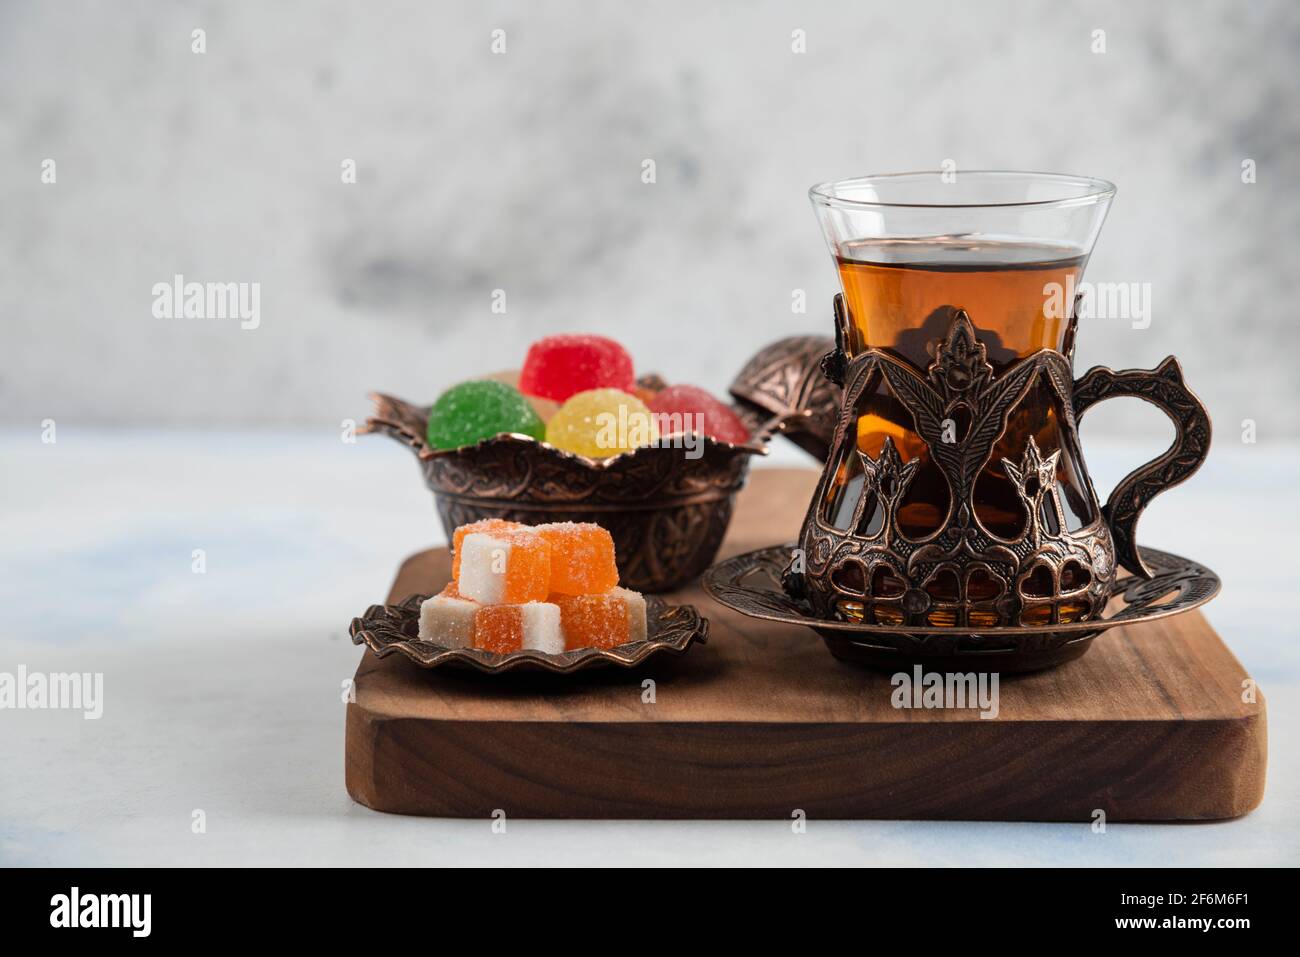 https://c8.alamy.com/comp/2F6M6F1/turkish-tea-set-fragrant-tea-and-candies-on-wooden-board-2F6M6F1.jpg